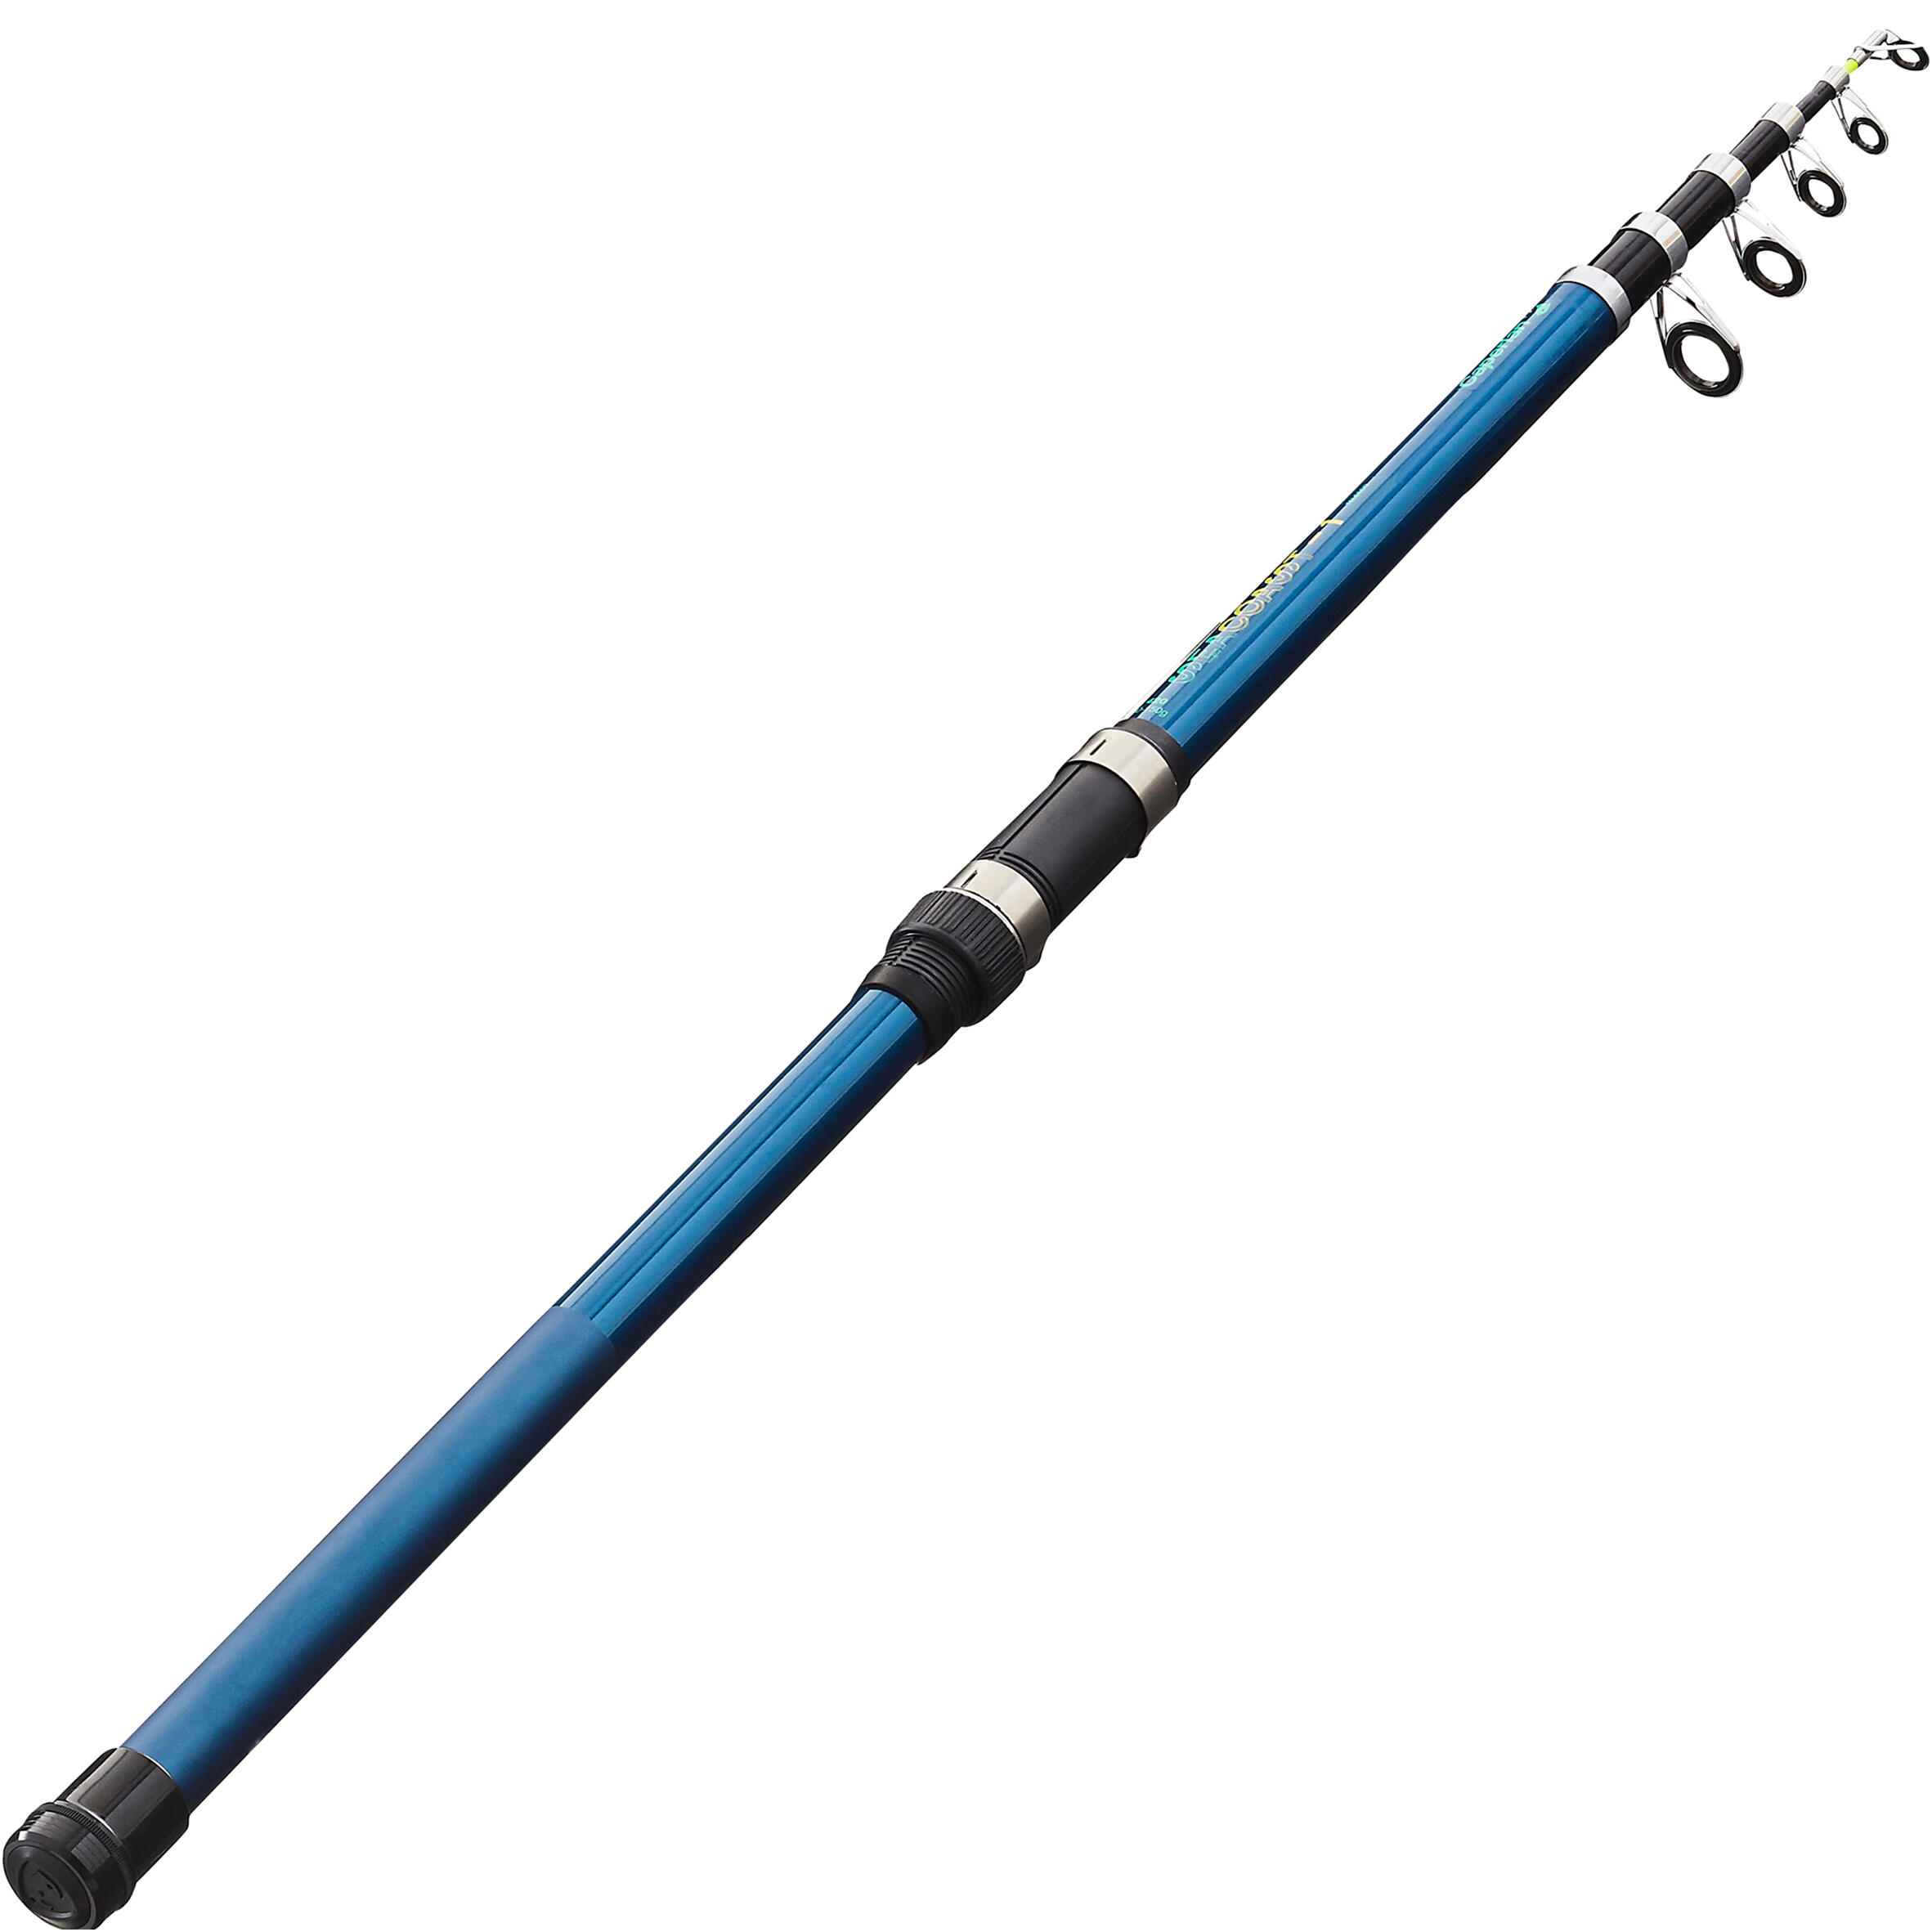 telescopic fishing rod decathlon